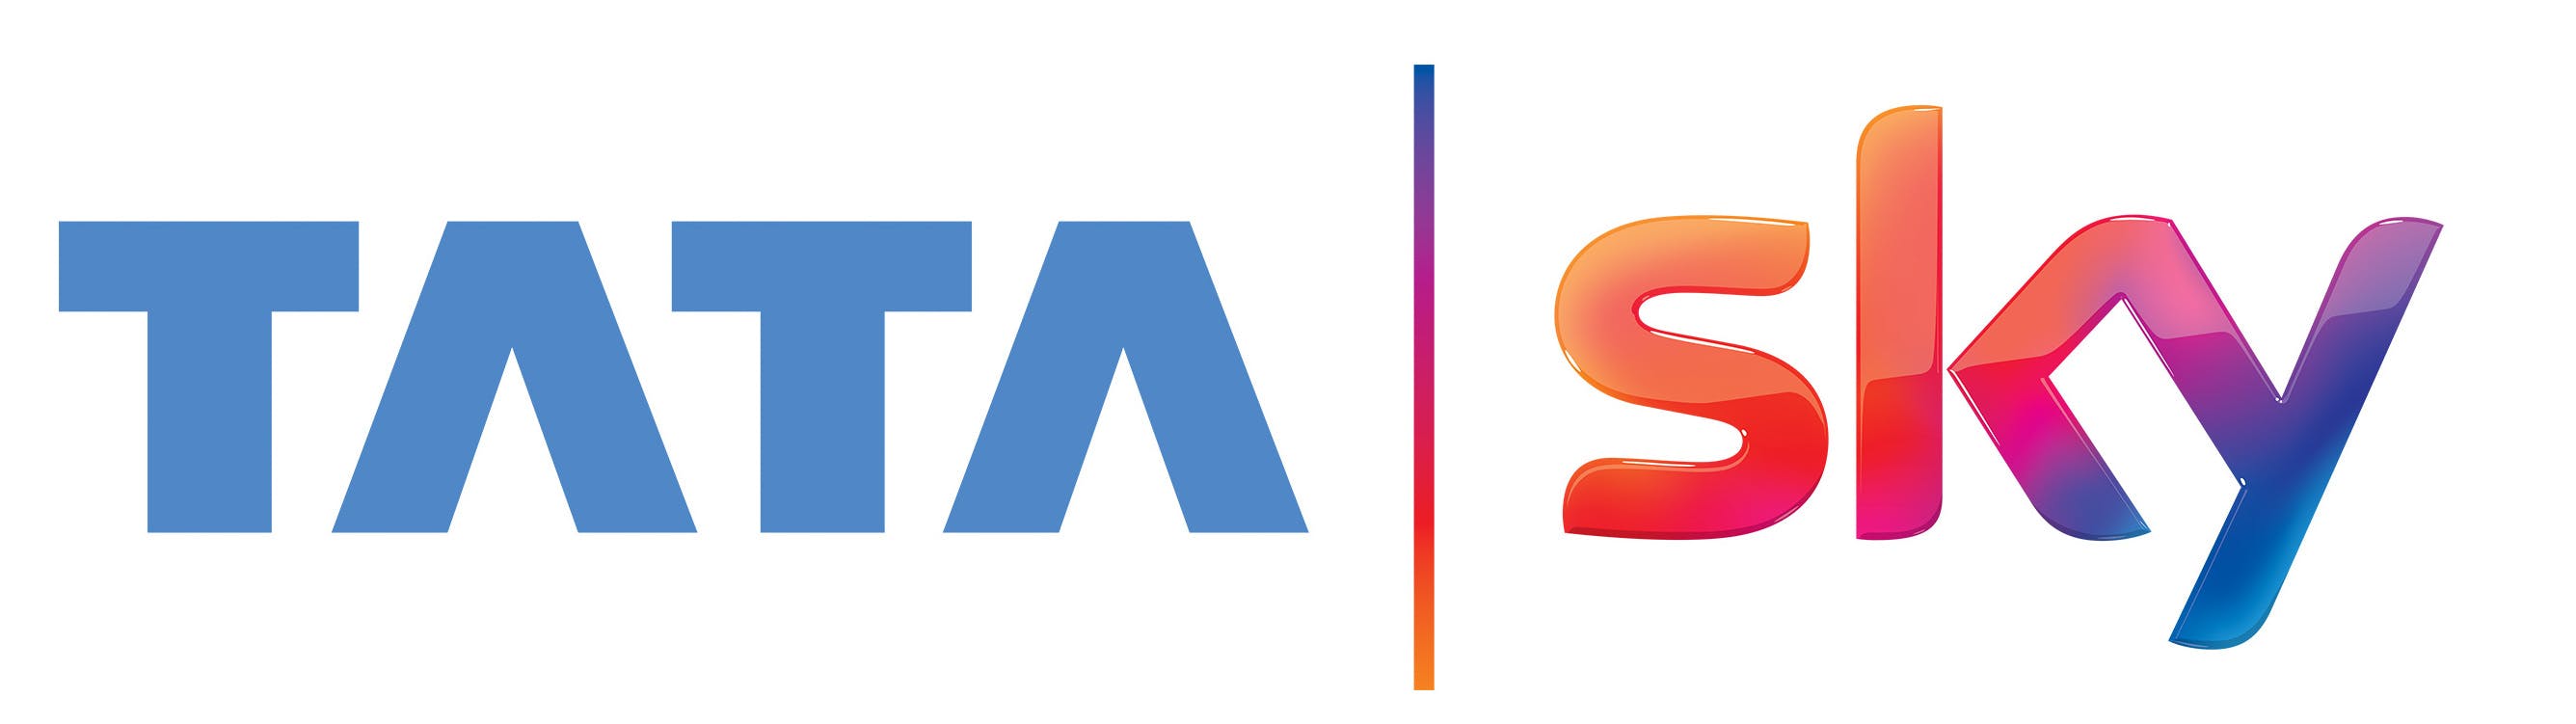 Tata Sky Logo